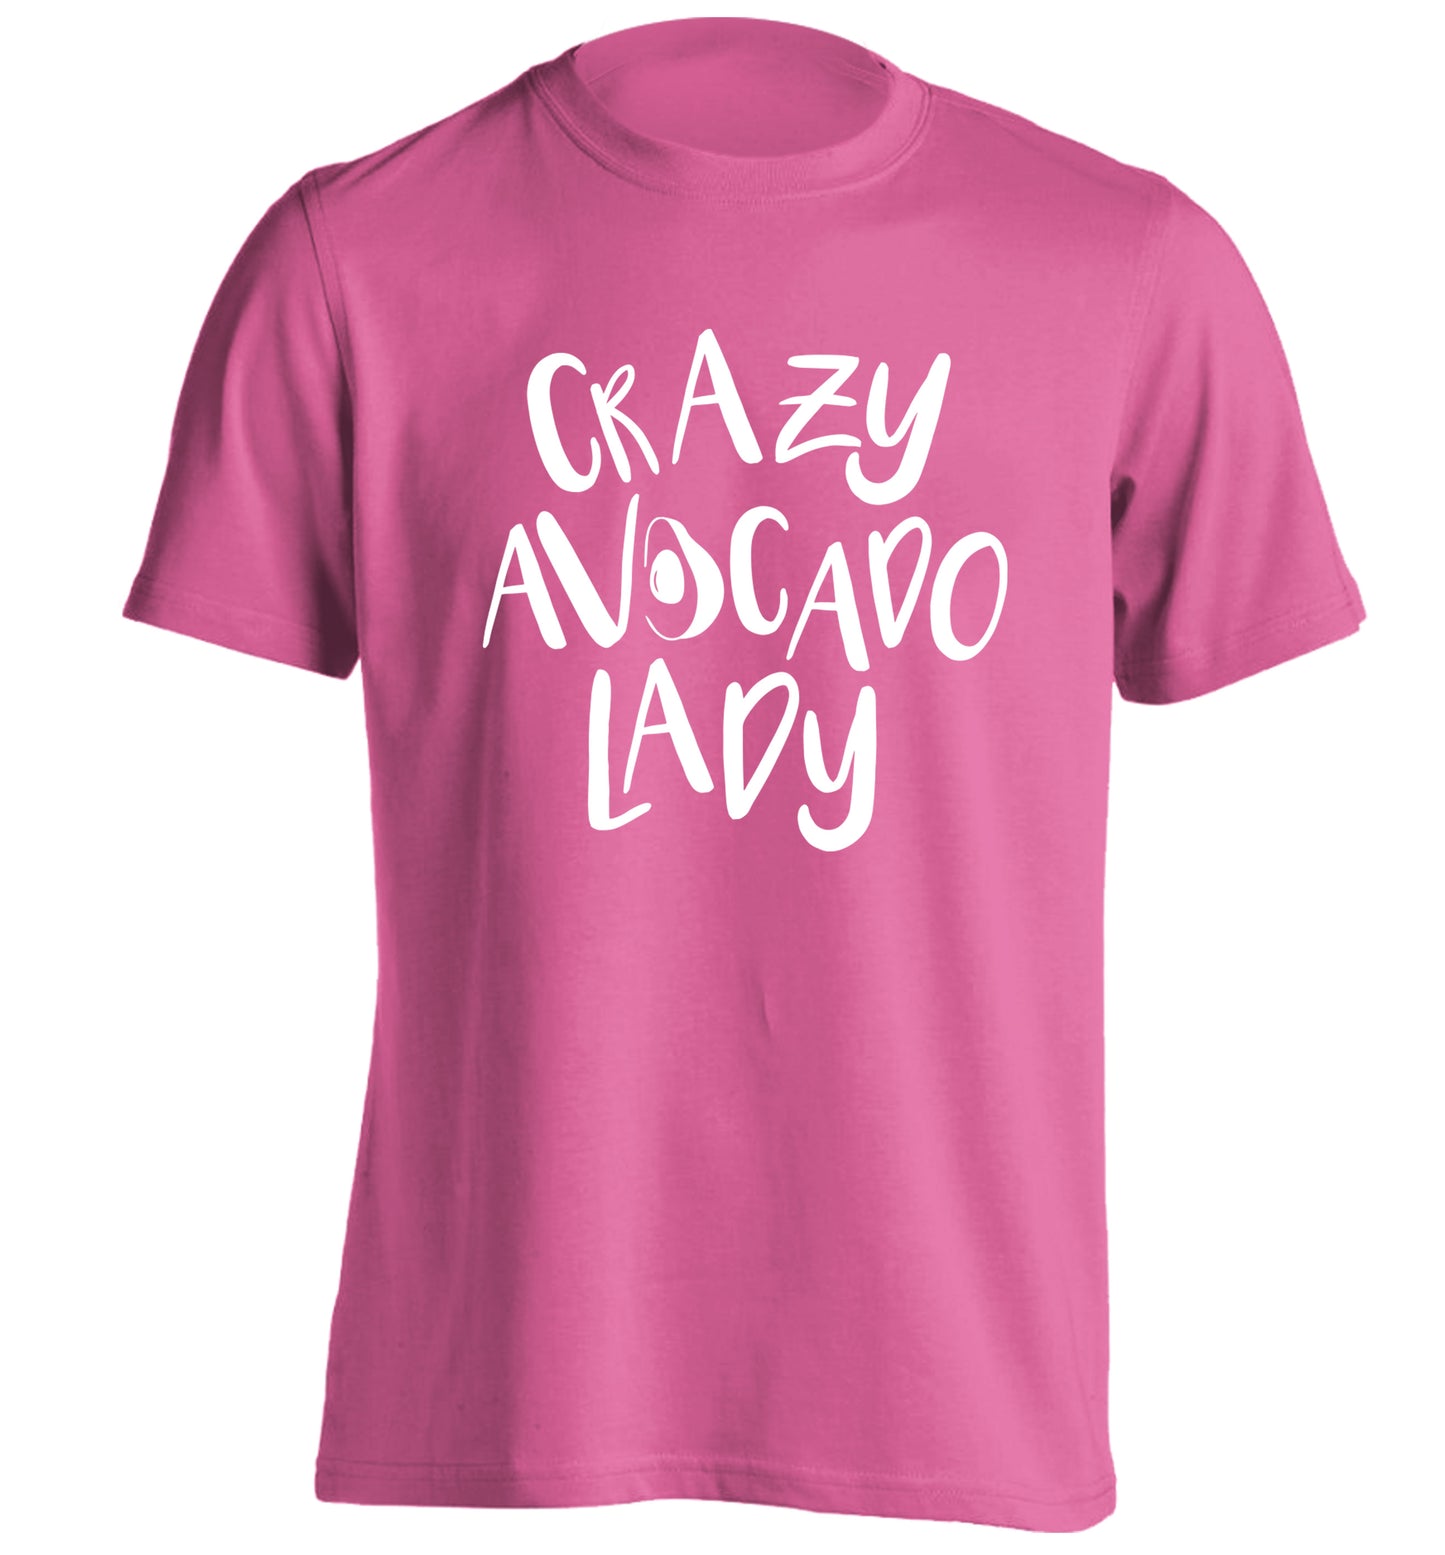 Crazy avocado lady adults unisex pink Tshirt 2XL